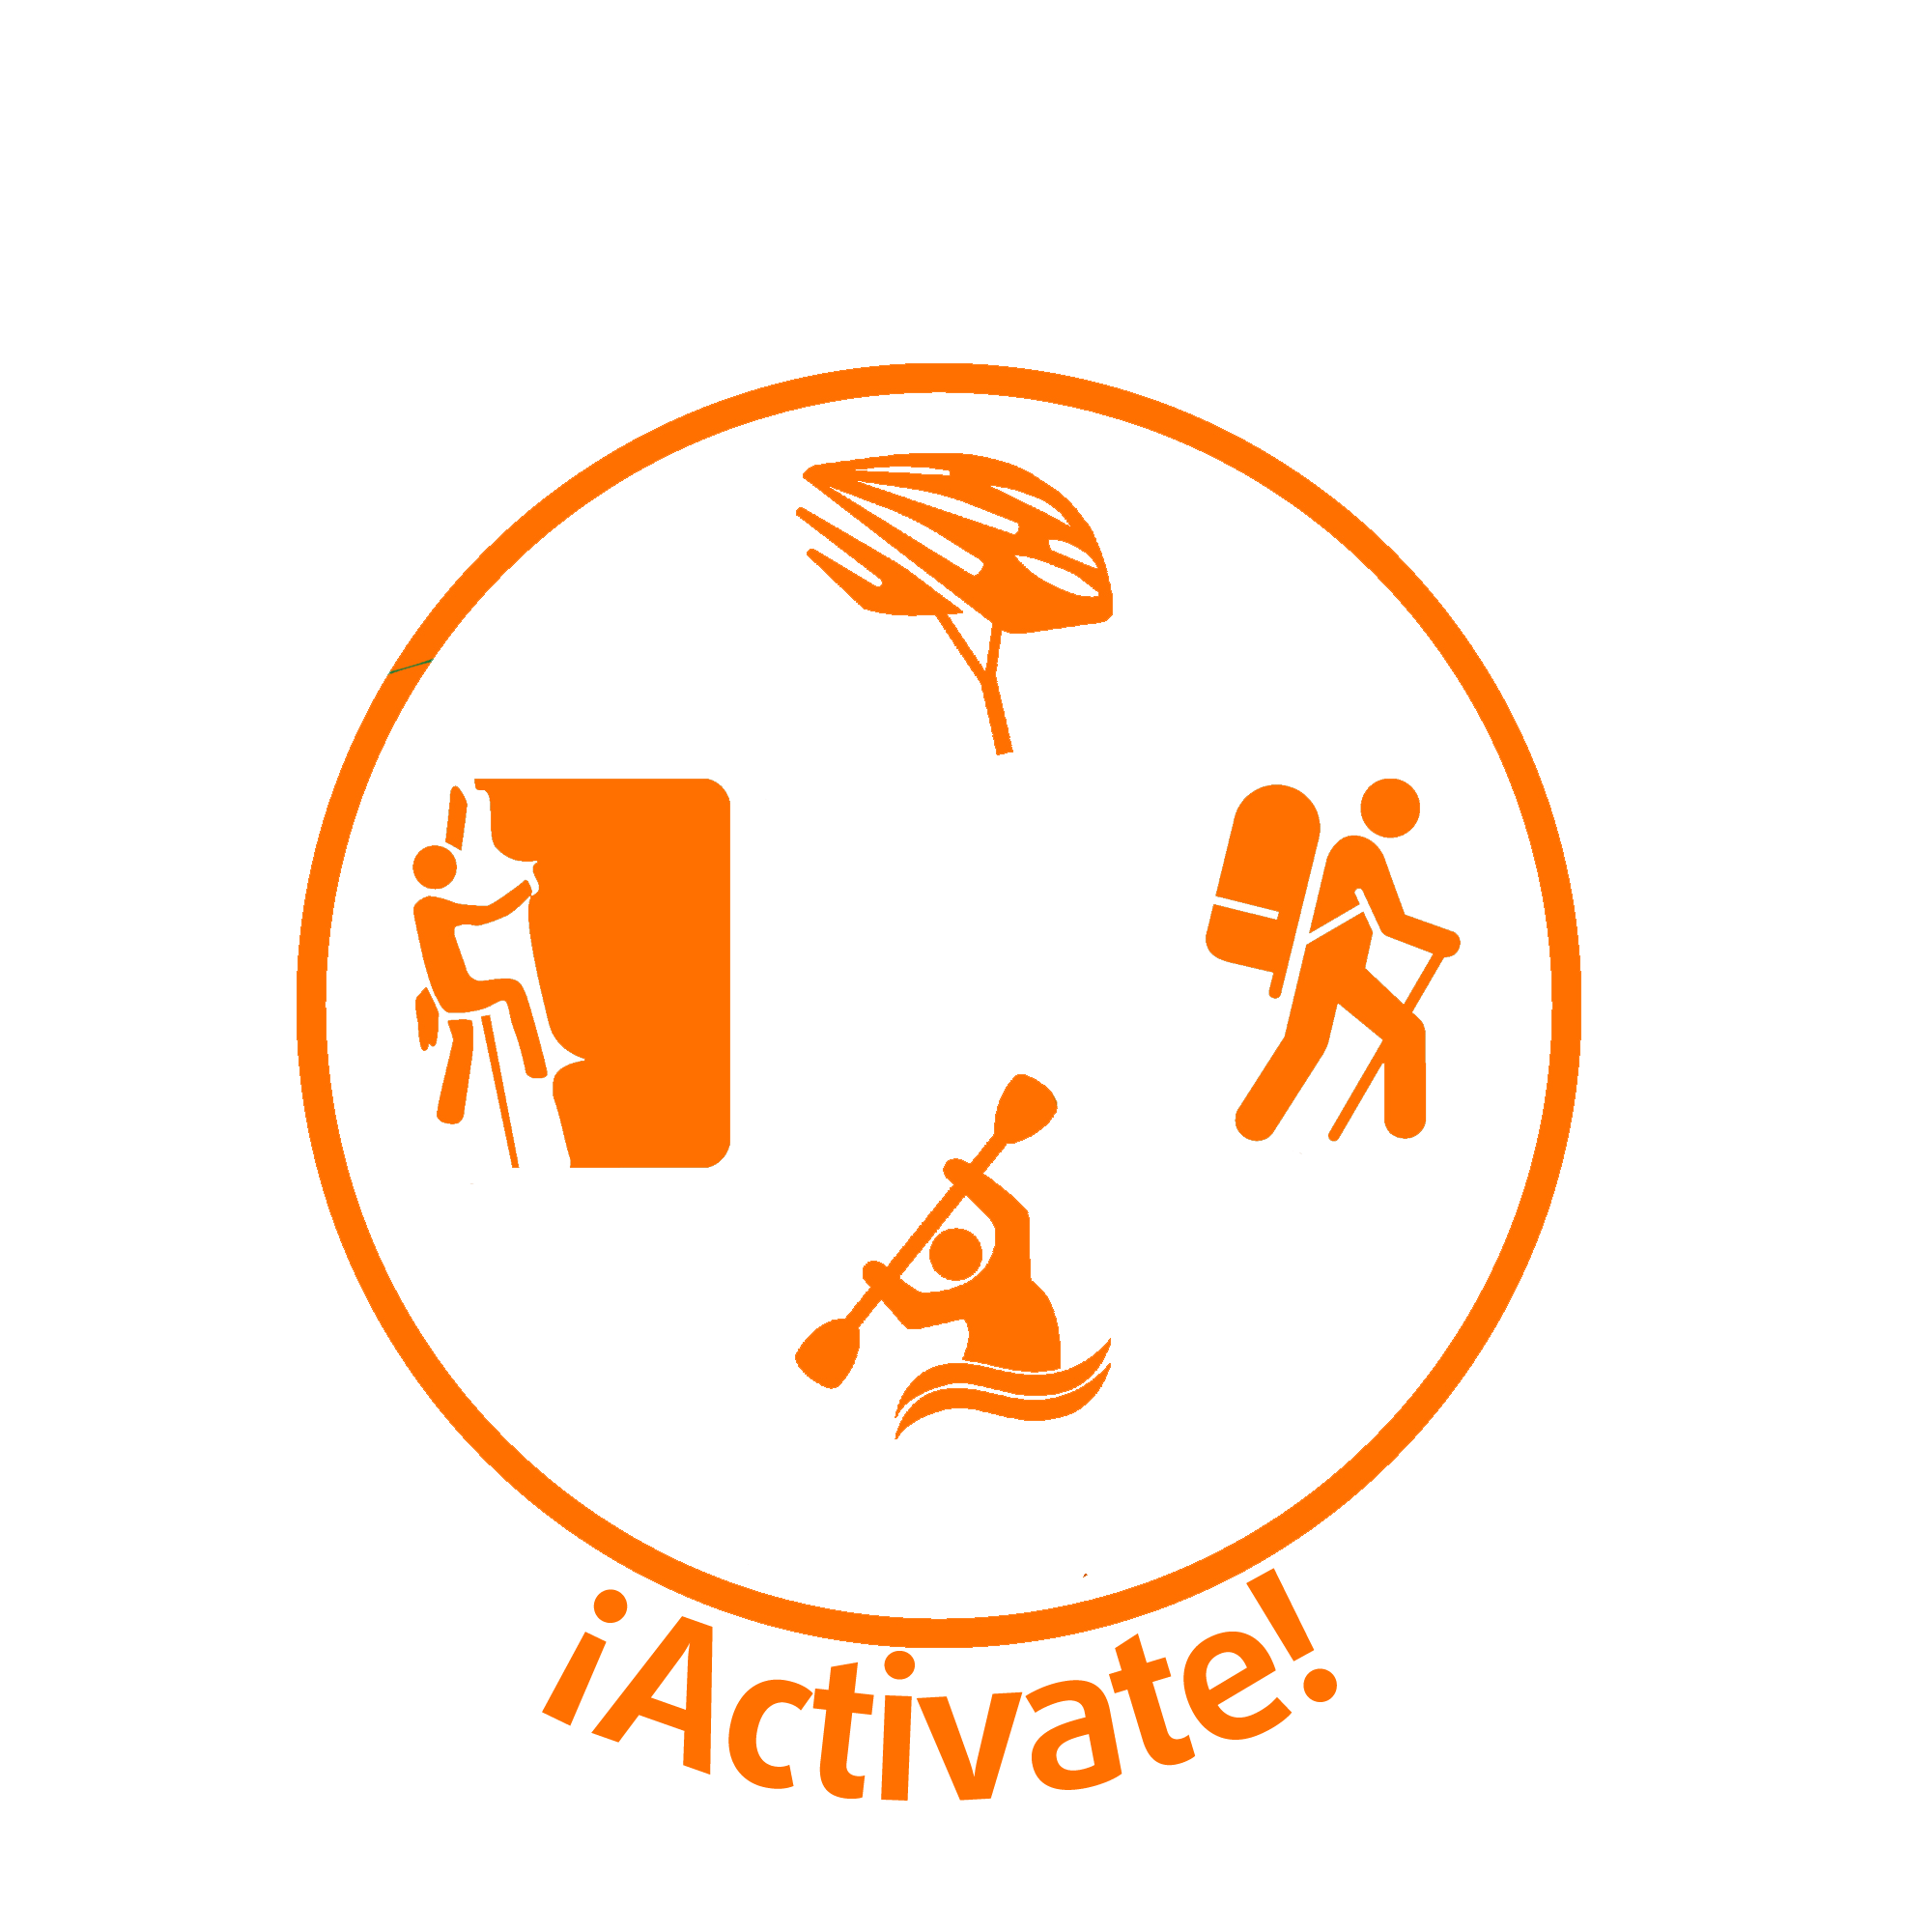 Logo Activate